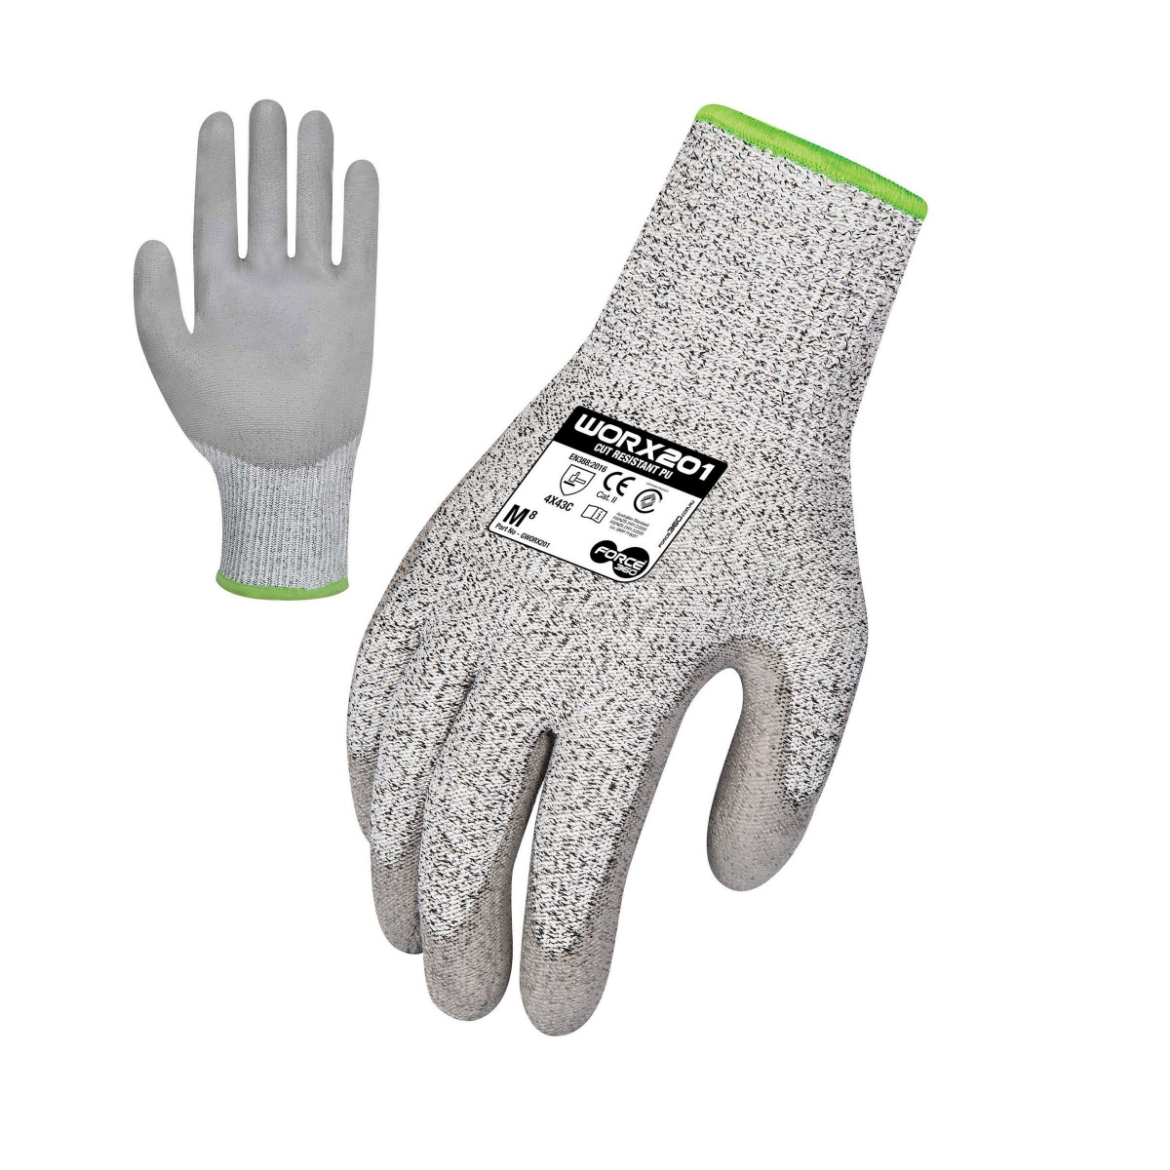 Picture of Force360 Cut Resistant PU Glove (Cut Level D) Large